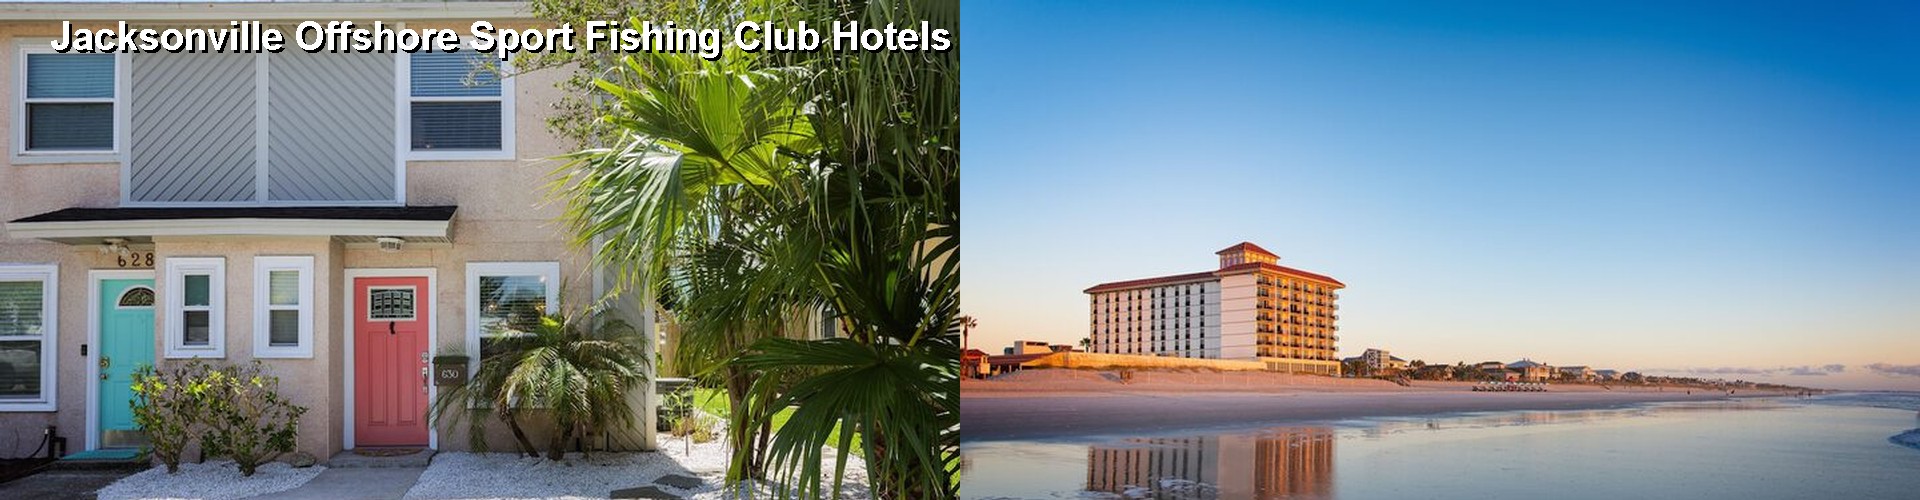 5 Best Hotels near Jacksonville Offshore Sport Fishing Club